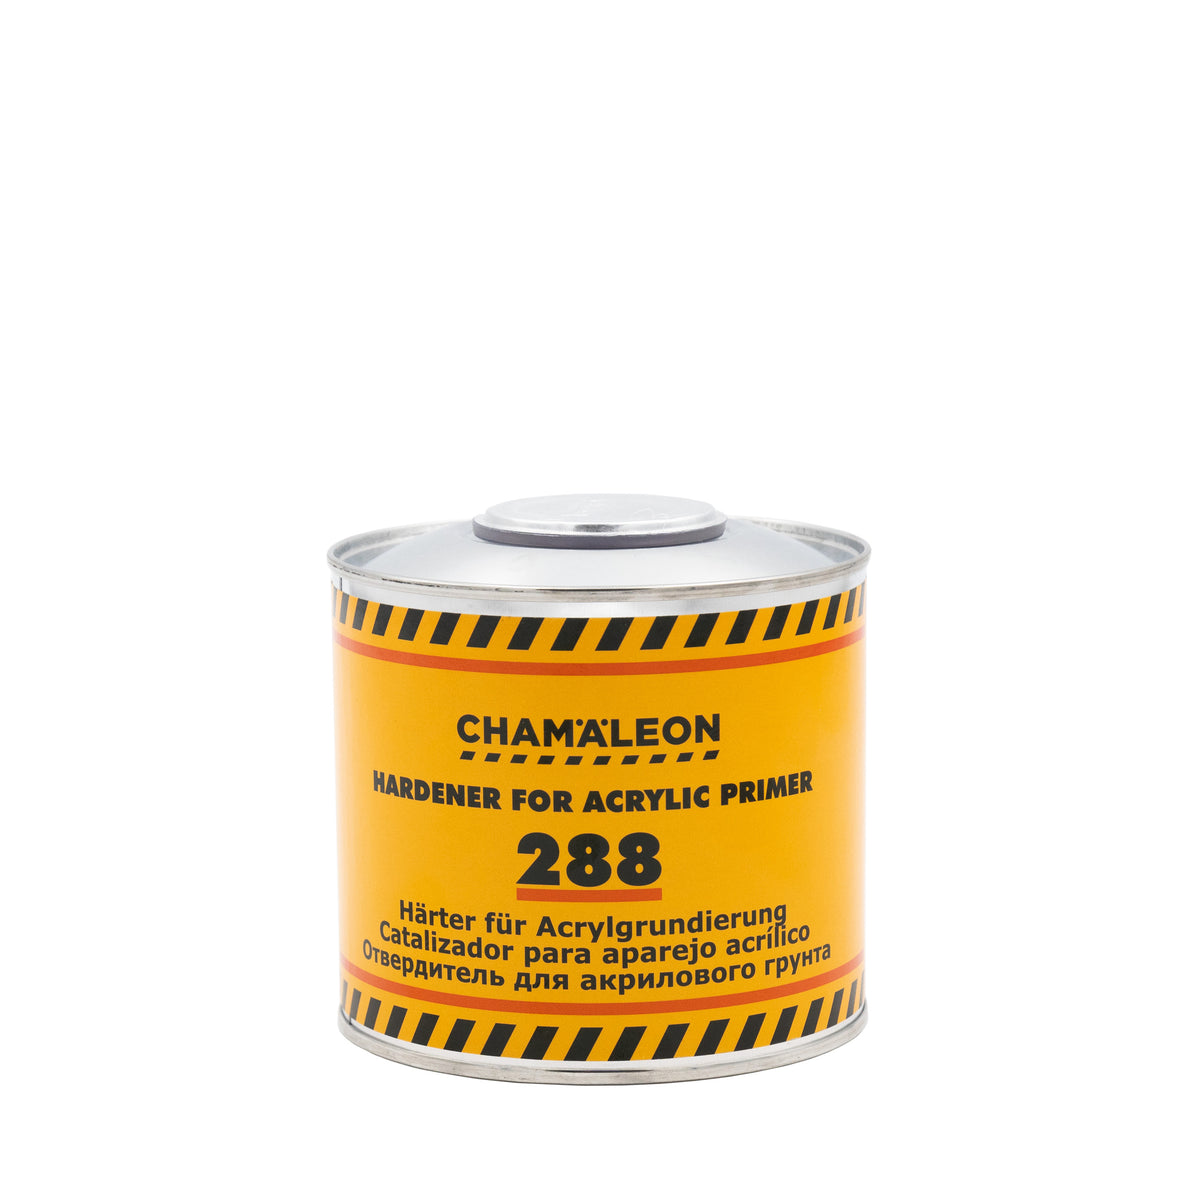 CHAMALEON Hardener 288 for Acrylic Primer 488